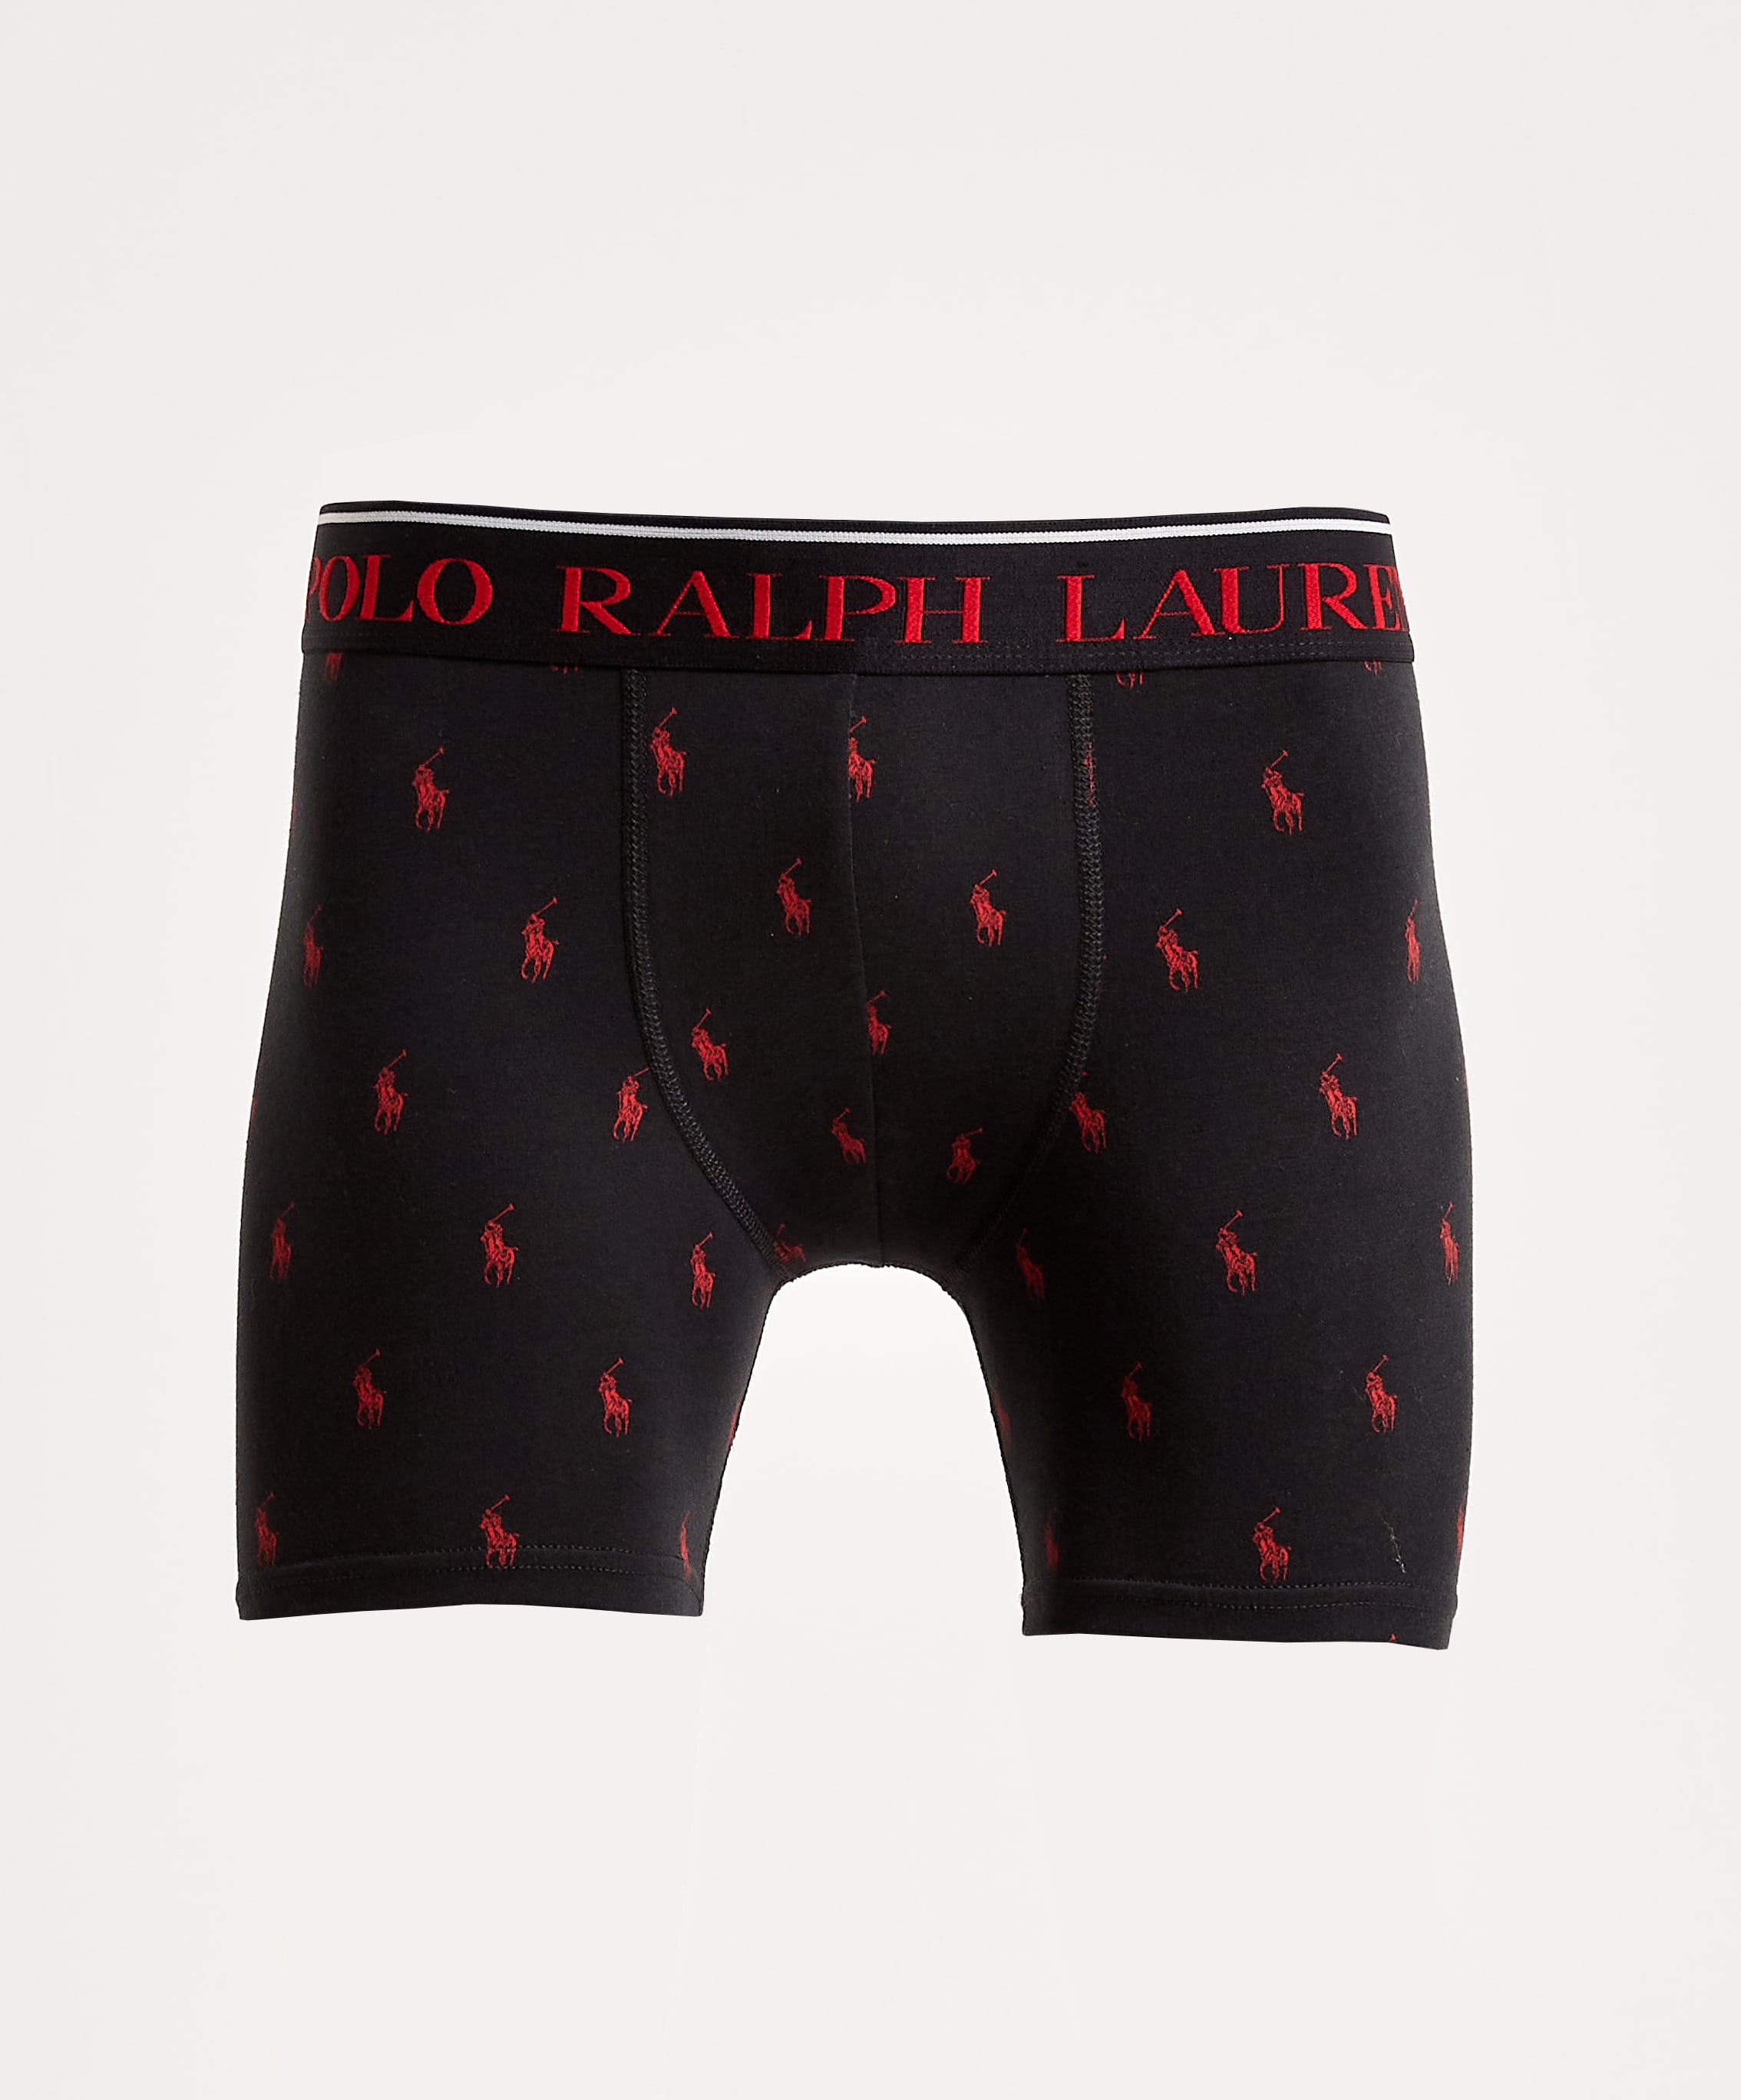 Polo Ralph Lauren Organic Stretch Cotton Boxer